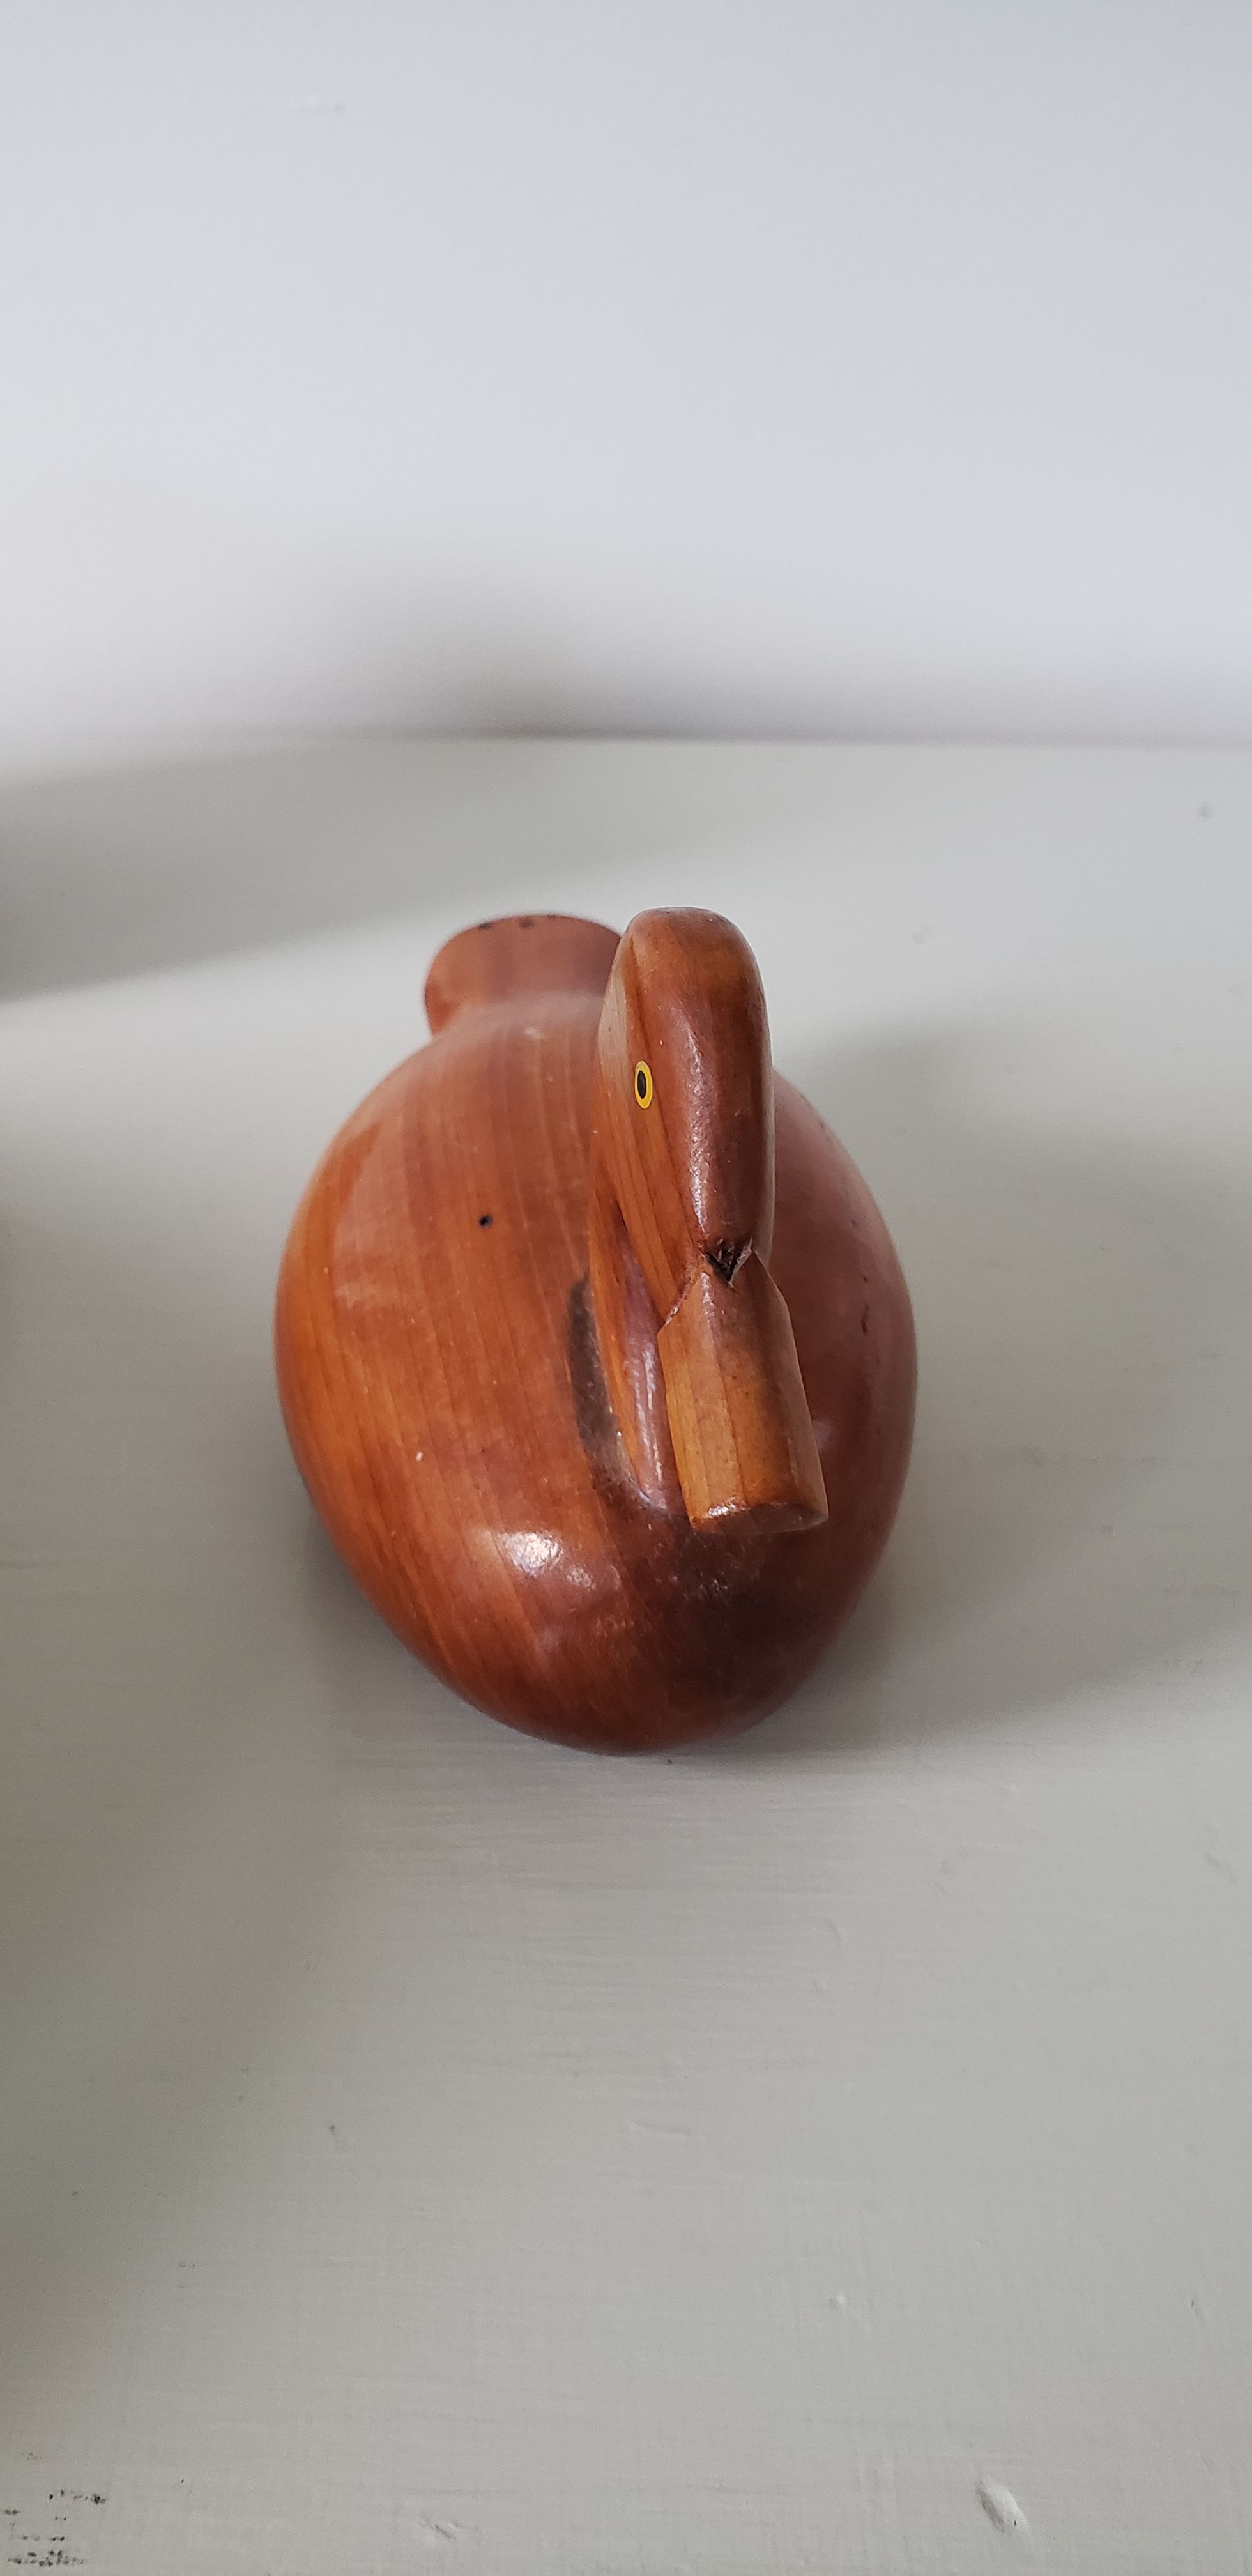 Duck figurine